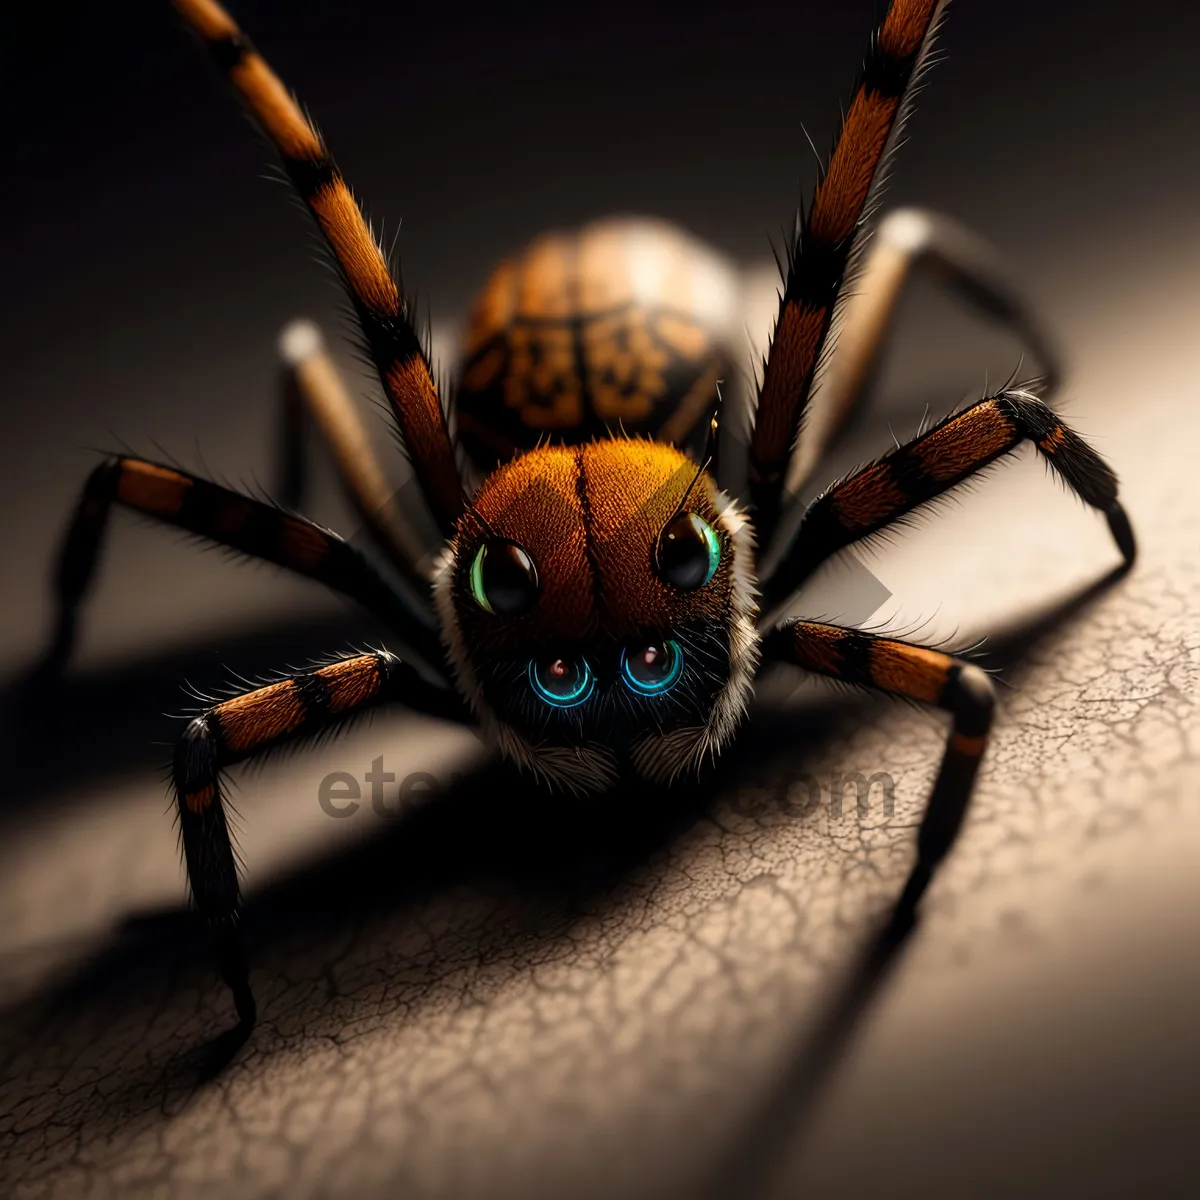 Picture of Black Widow Spider Close-Up: Deadly Arachnid in Wildlife